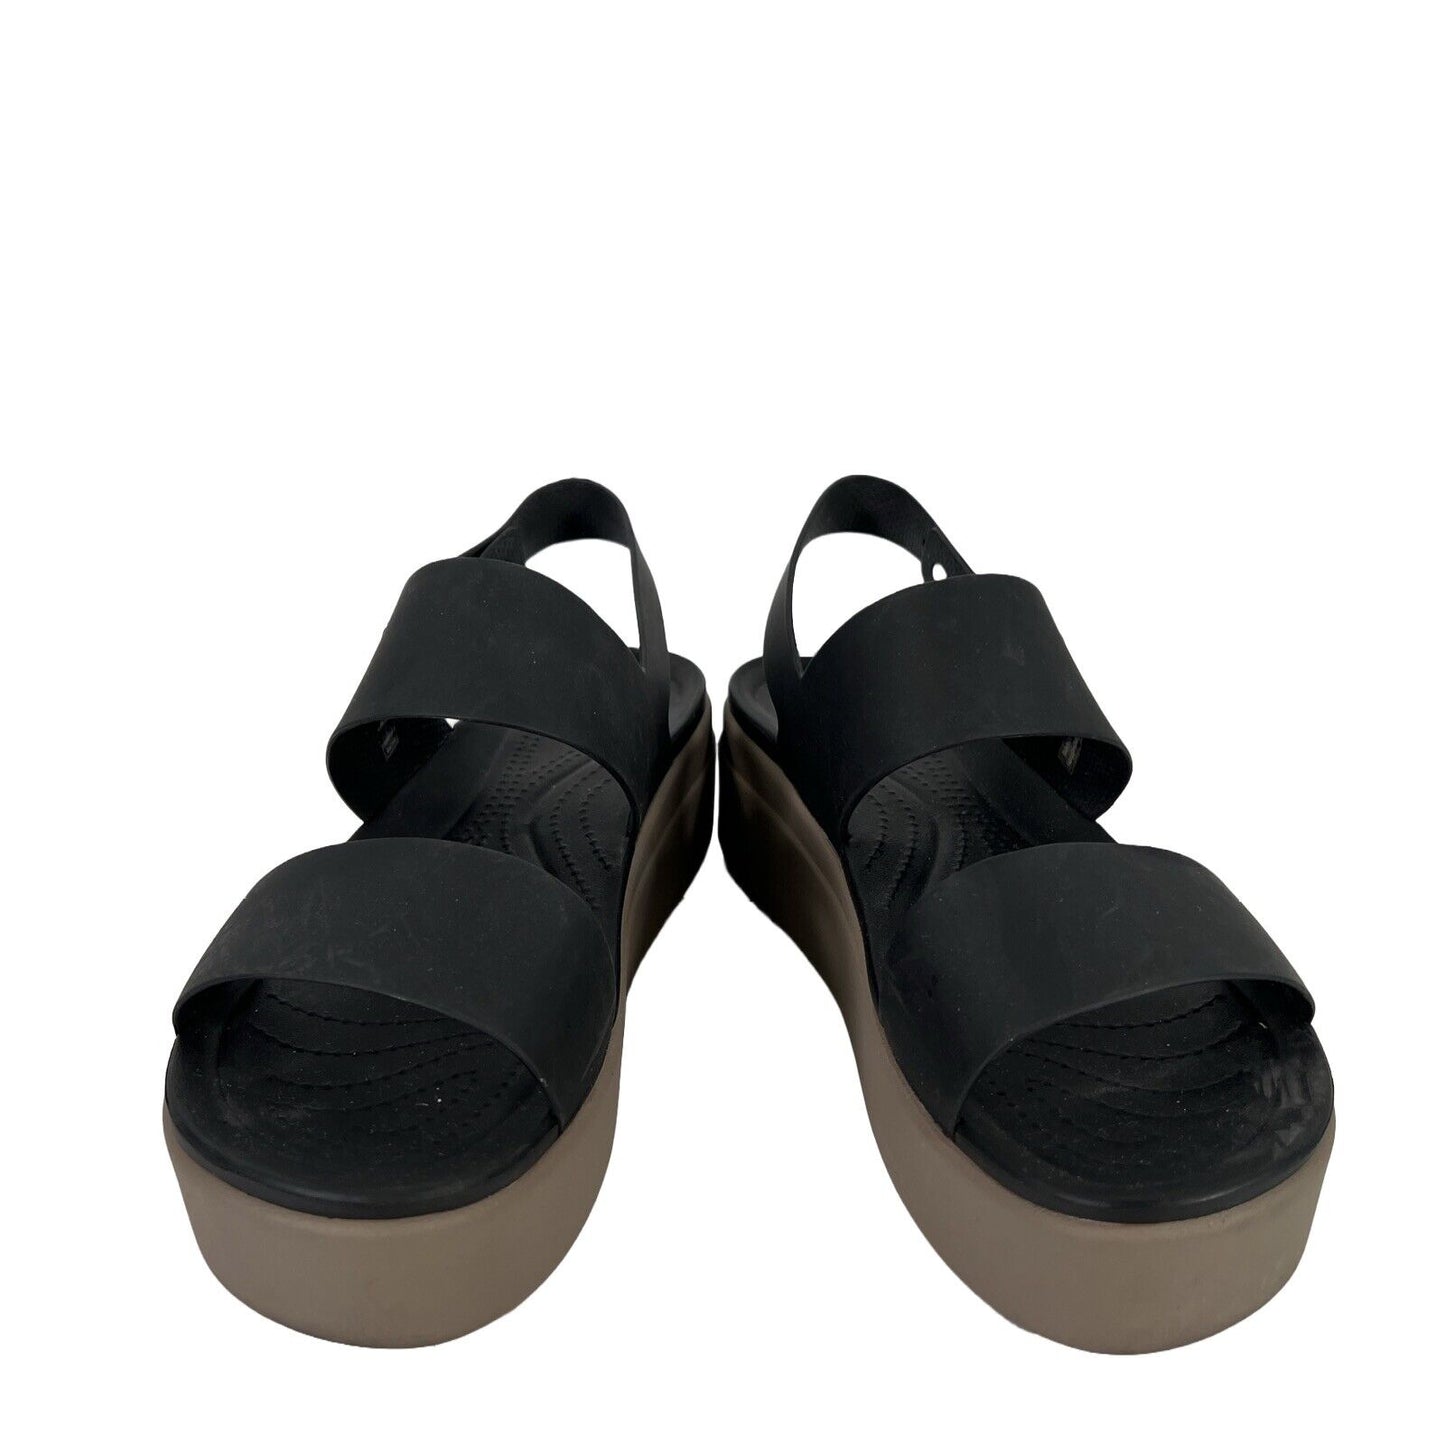 Crocs Women's Black Brooklyn Low Wedge Platform Sandals - 9